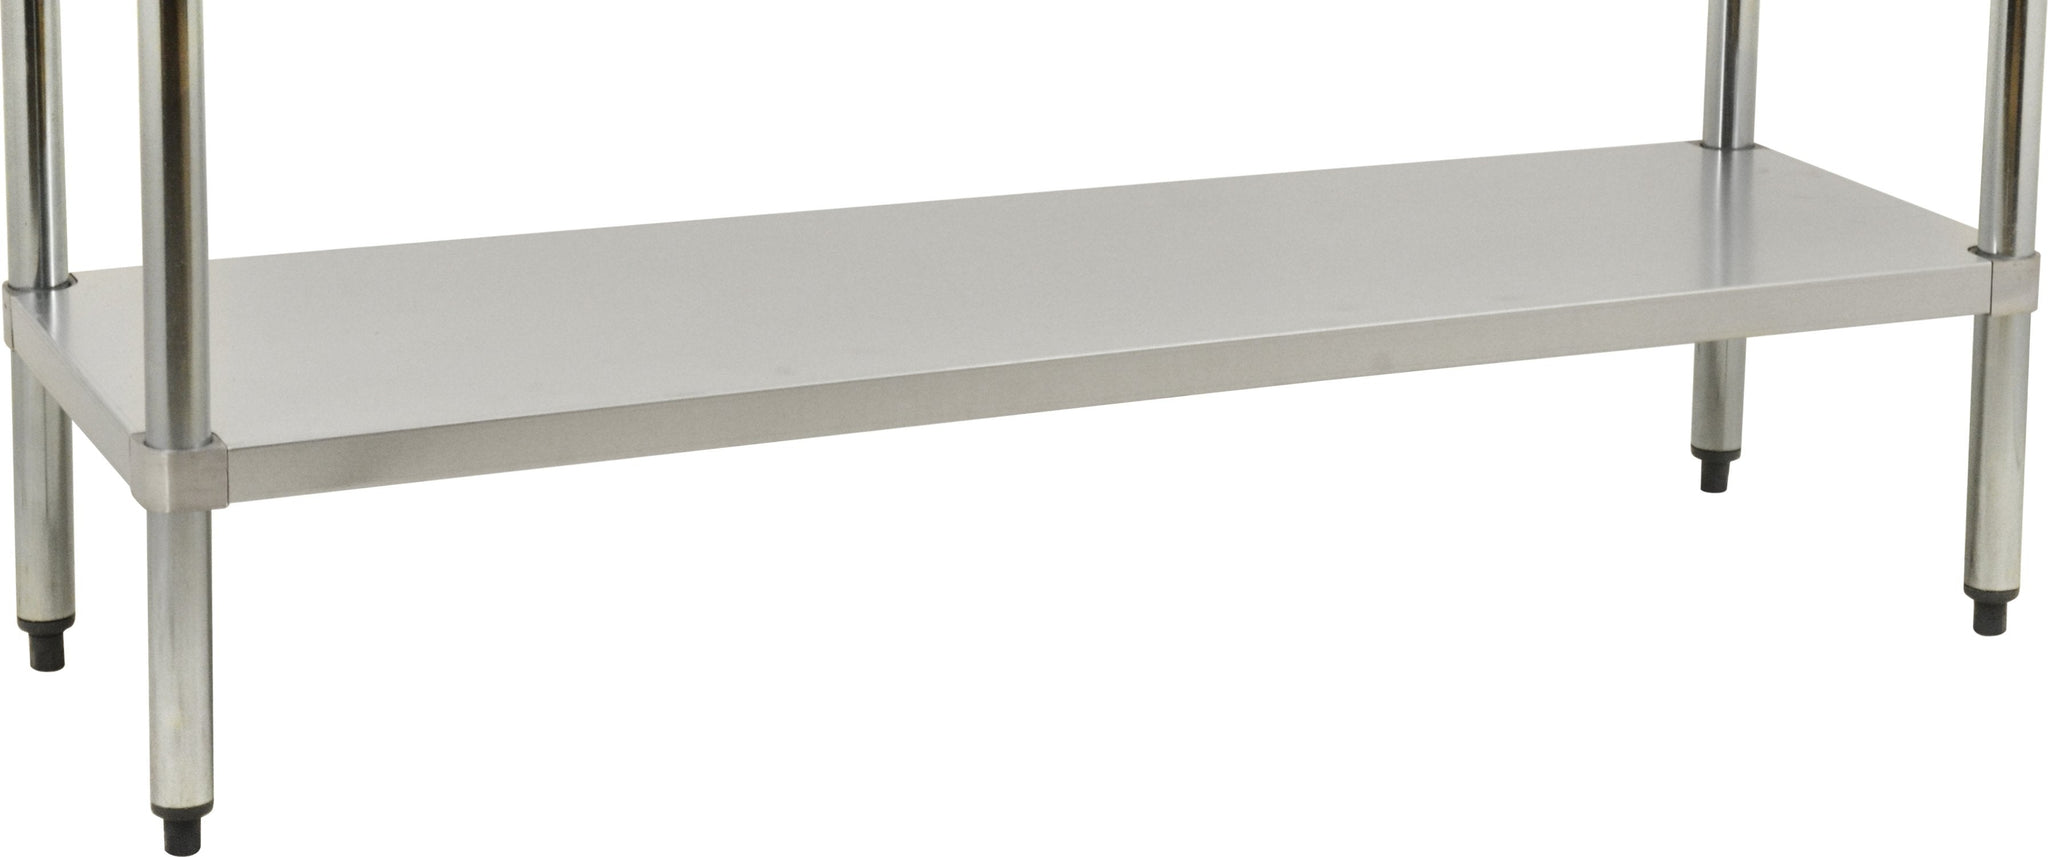 Omcan - 30” x 96” Stainless Steel Undershelf For Work Table - 21621